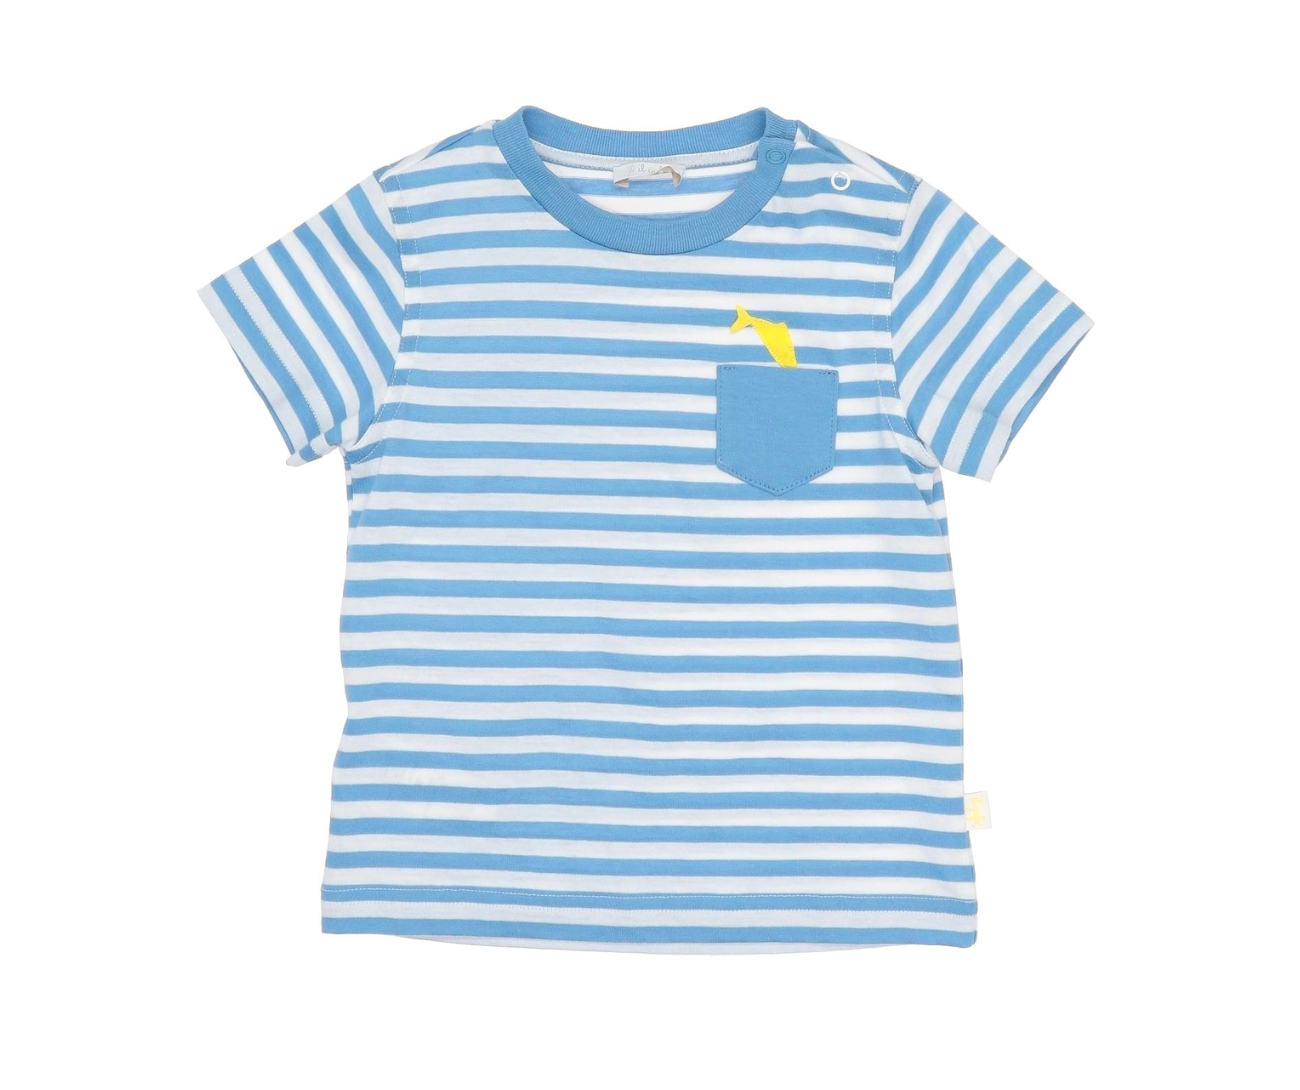 IL GUFO - T-shirt rayé bleu - 1 an